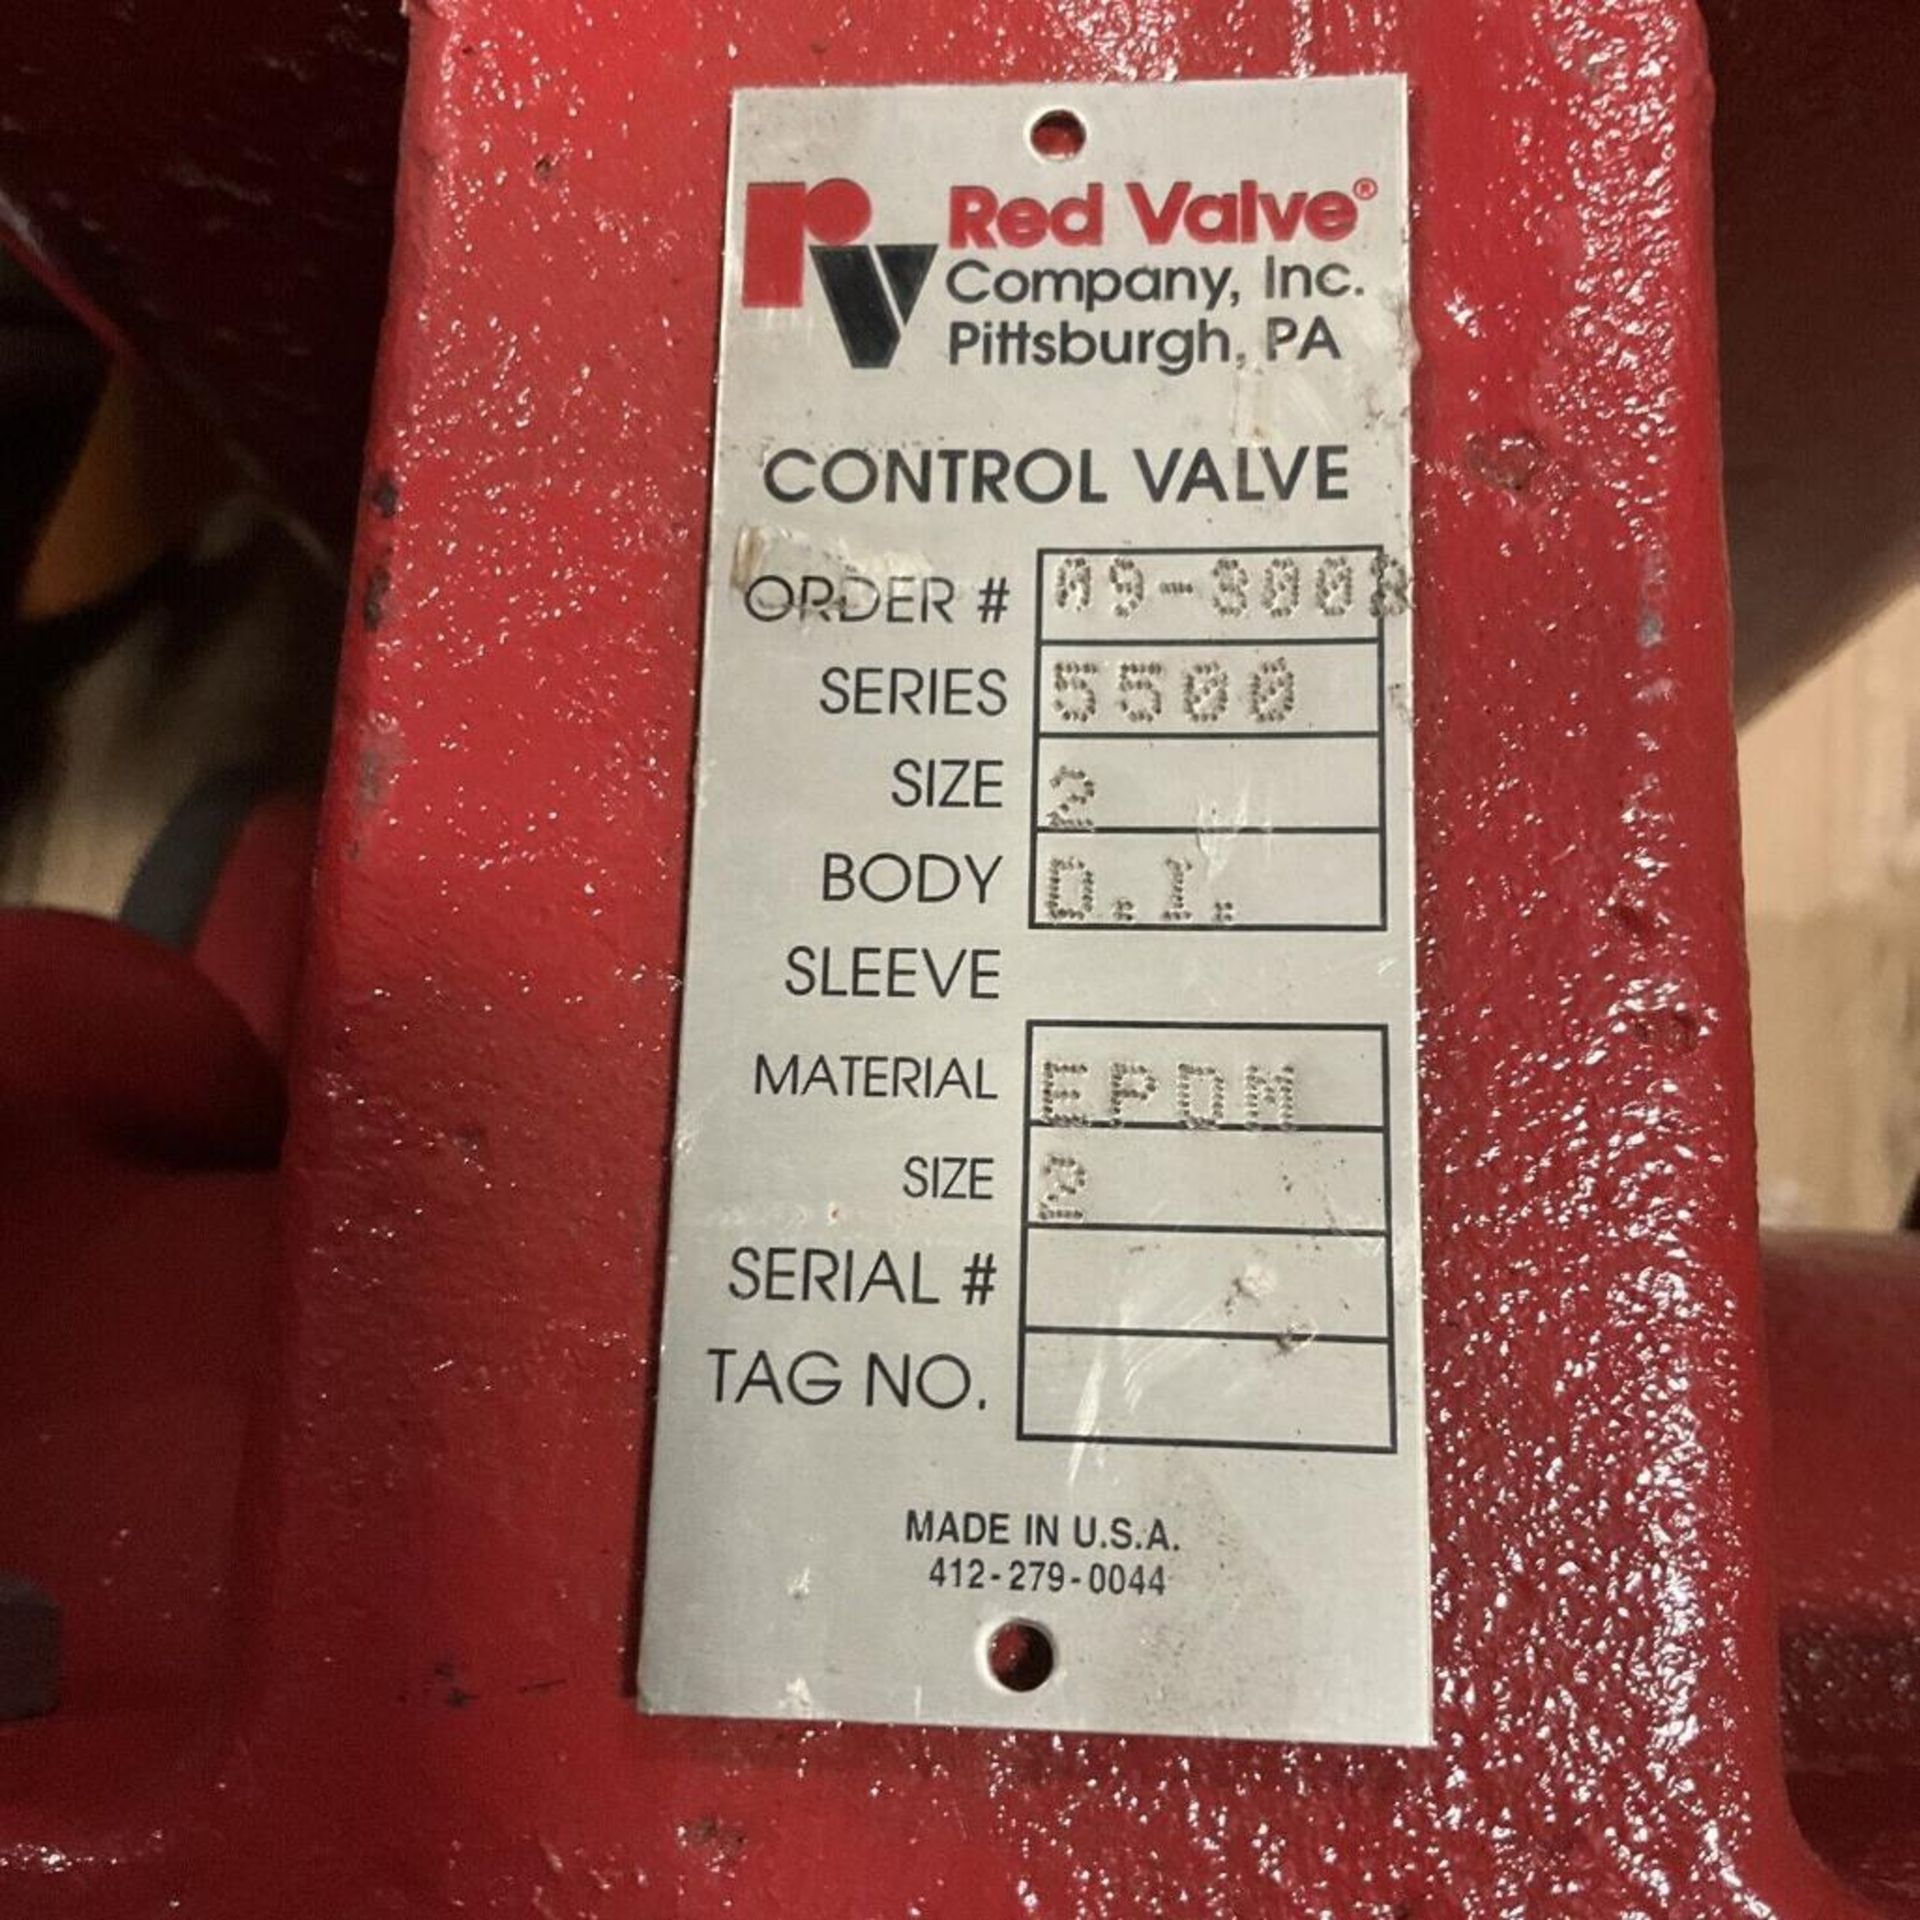 RED VALVE Co. PRESSURE CONTROL VALVE SERIES 5500 #09-3003 - Image 3 of 12